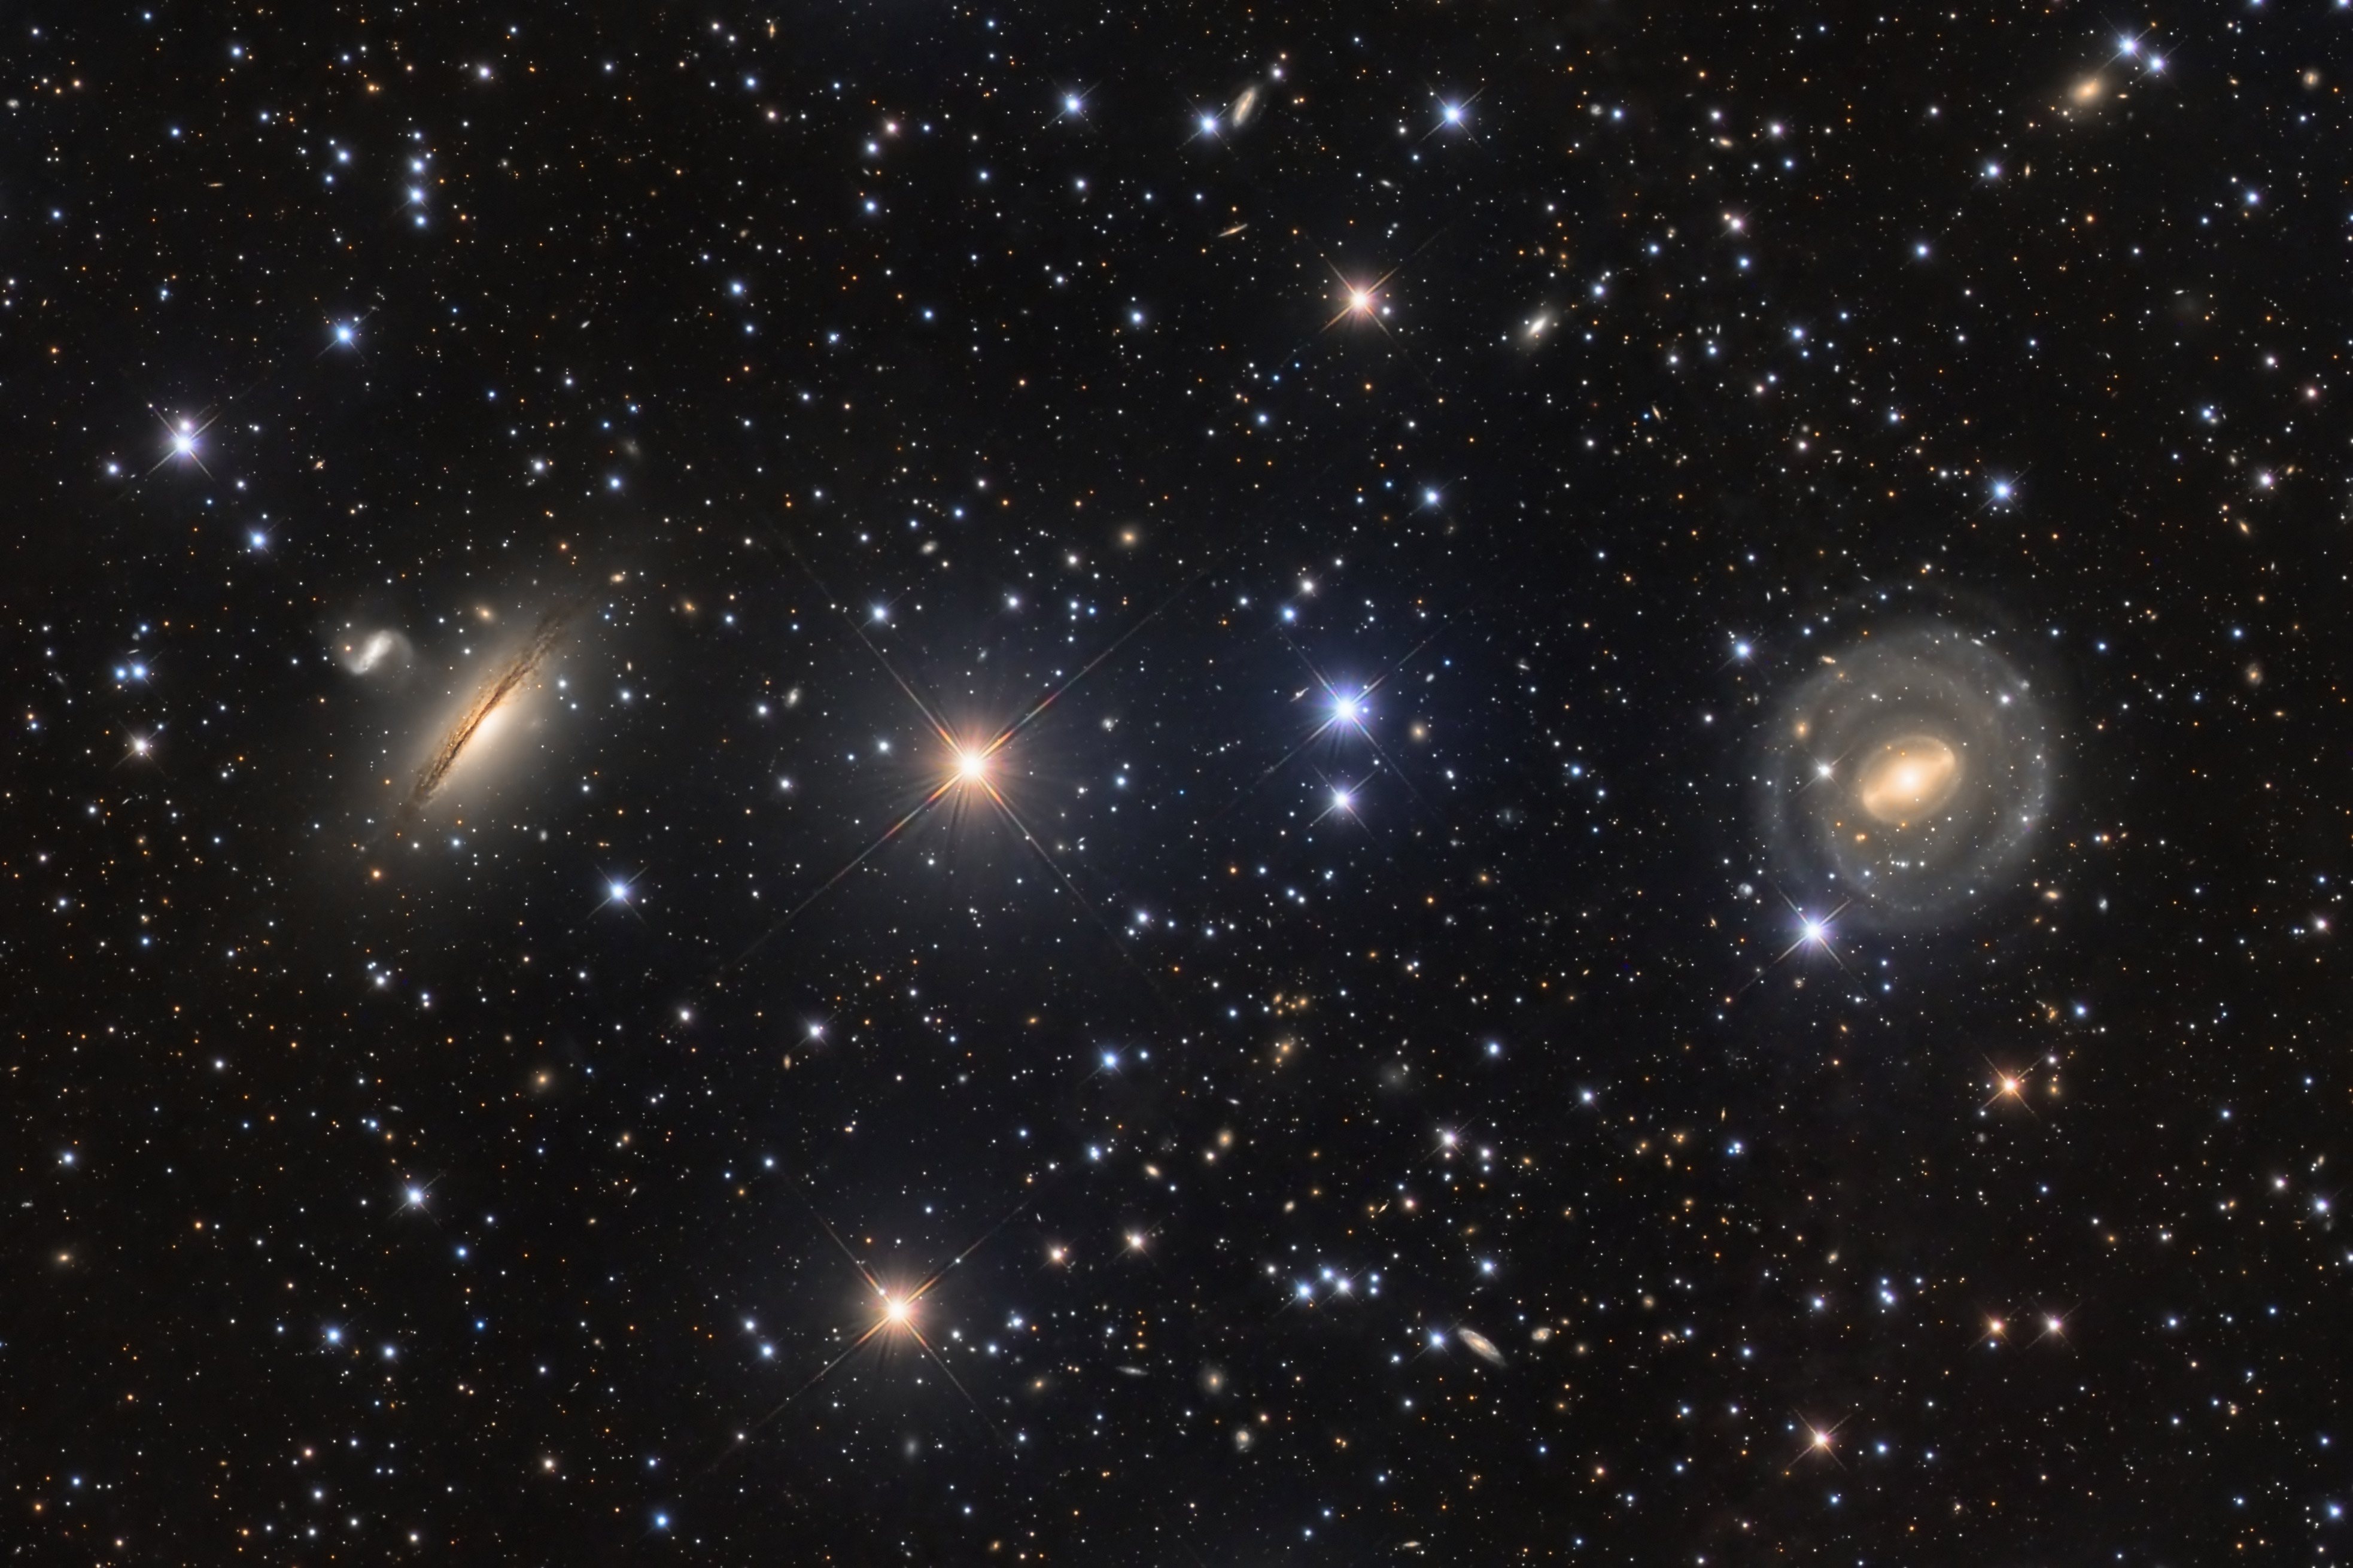 Neighboring galaxies